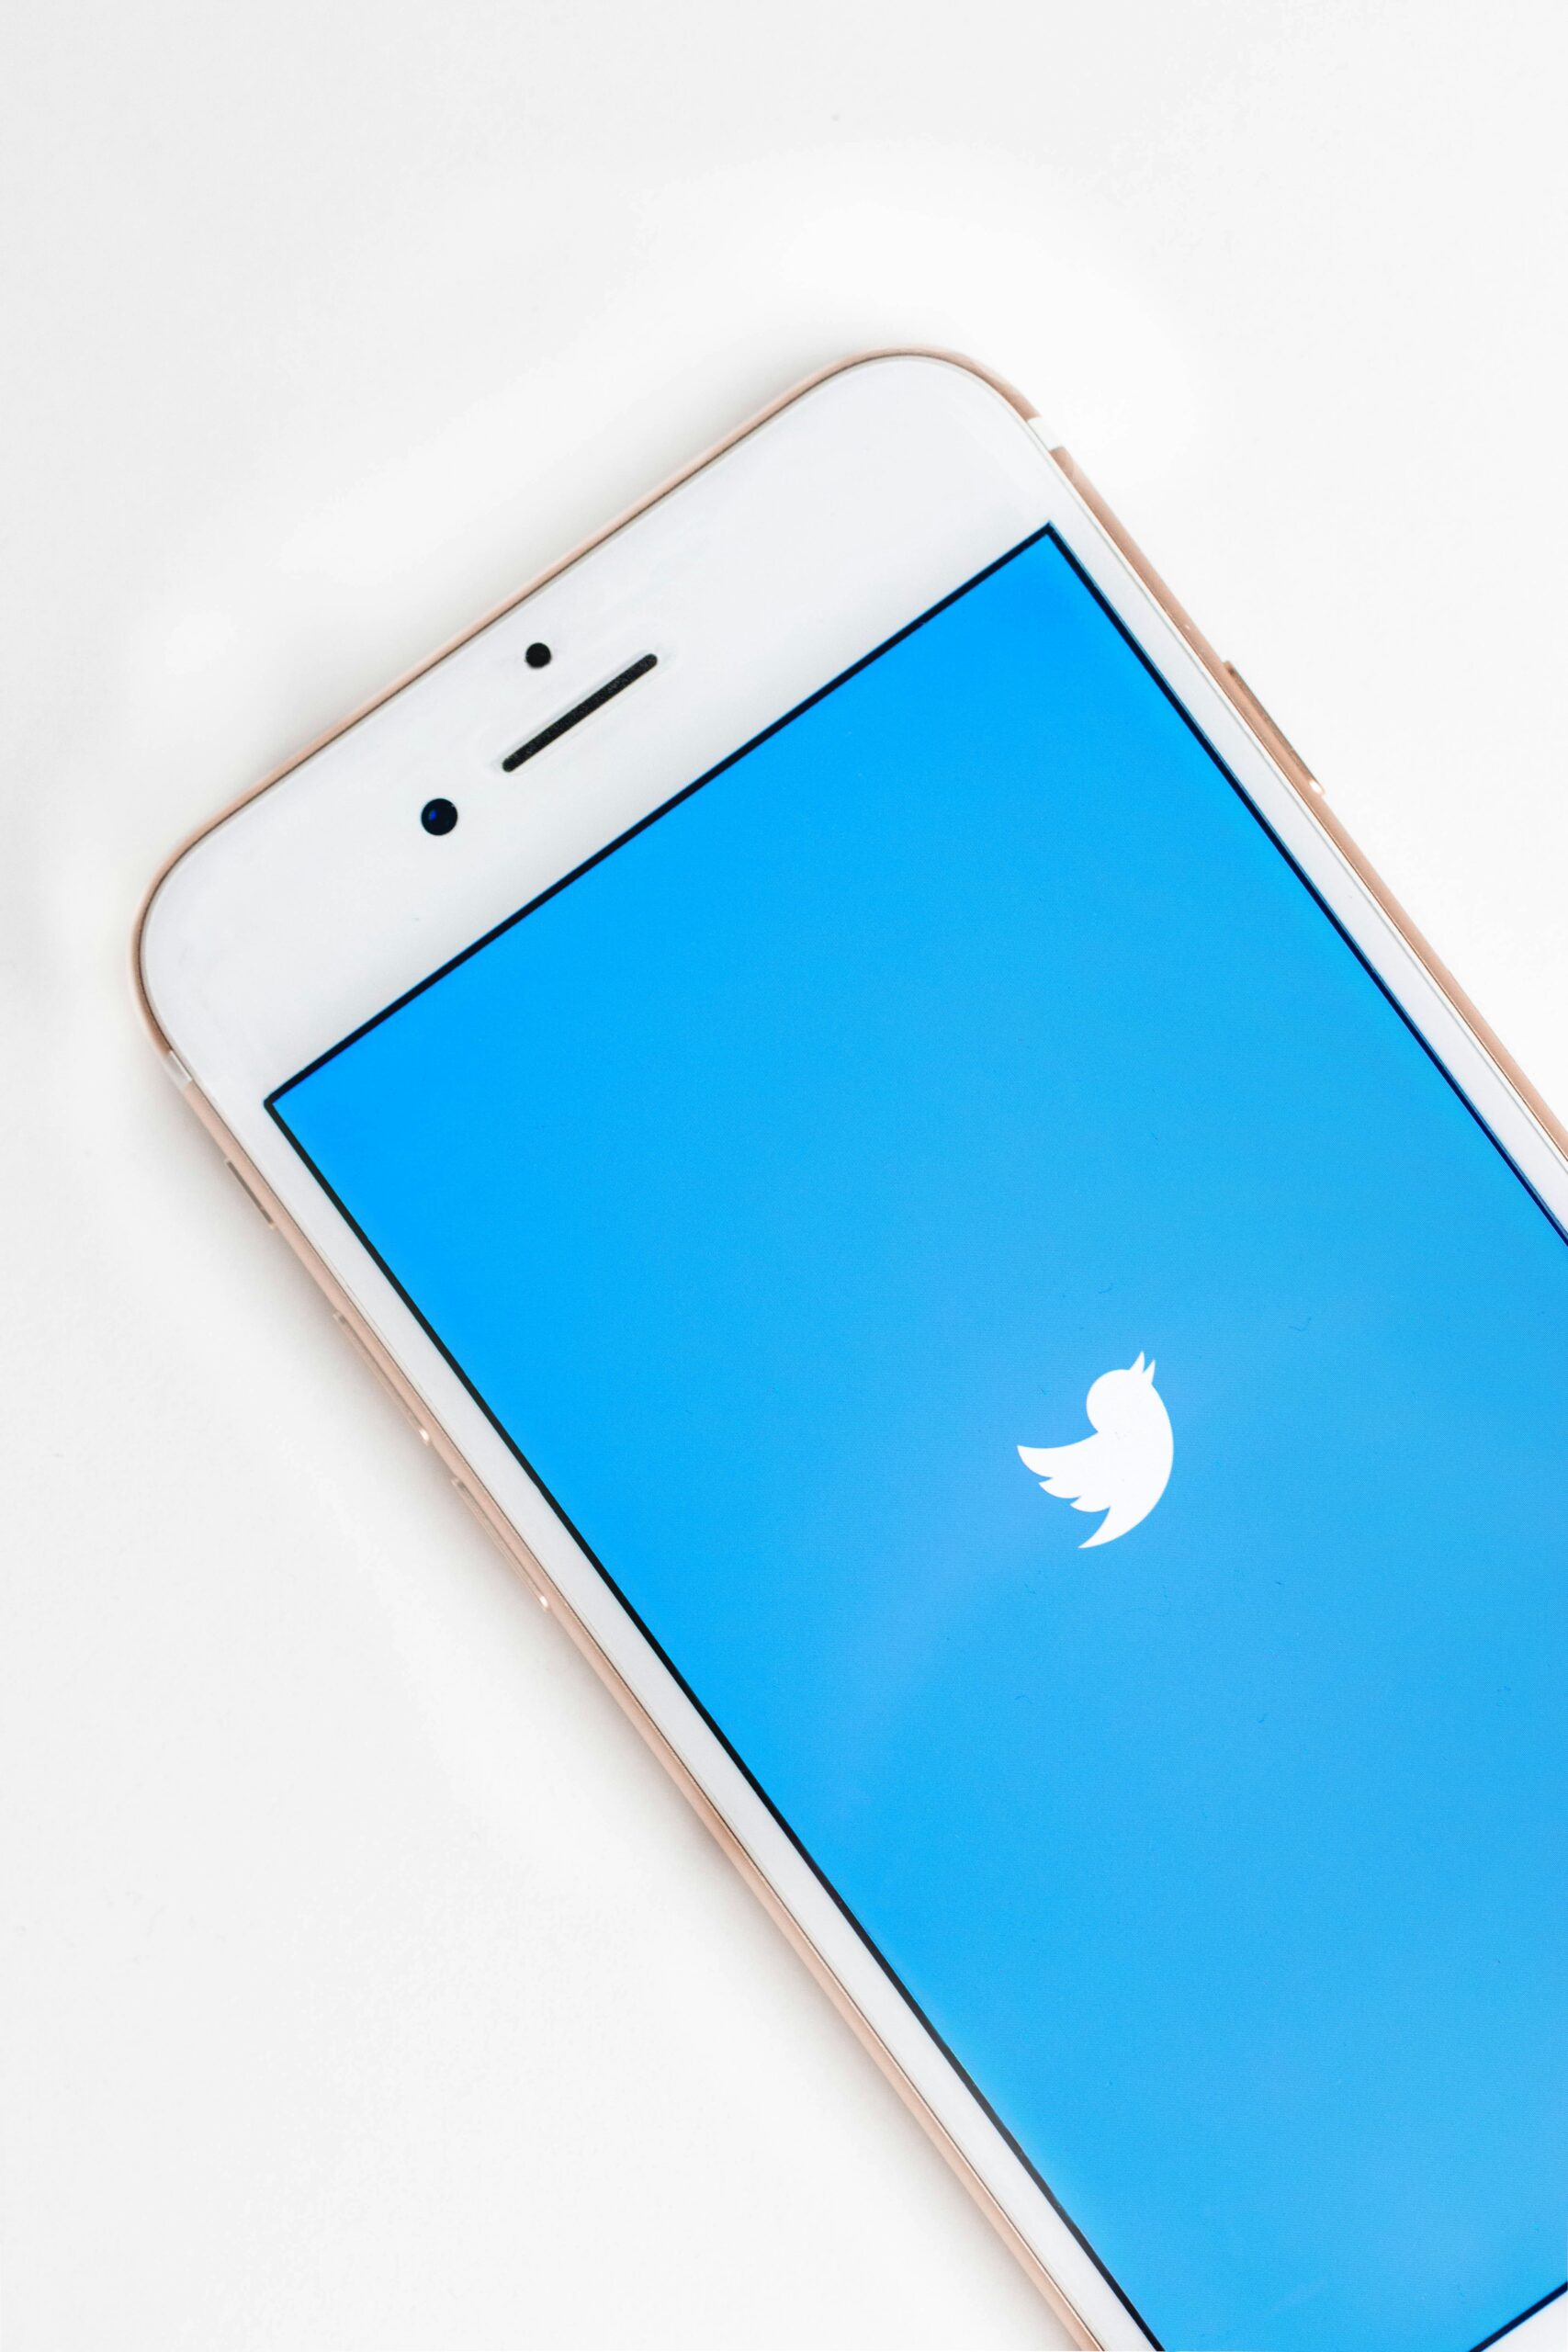 Twitter logo on smartphone screen